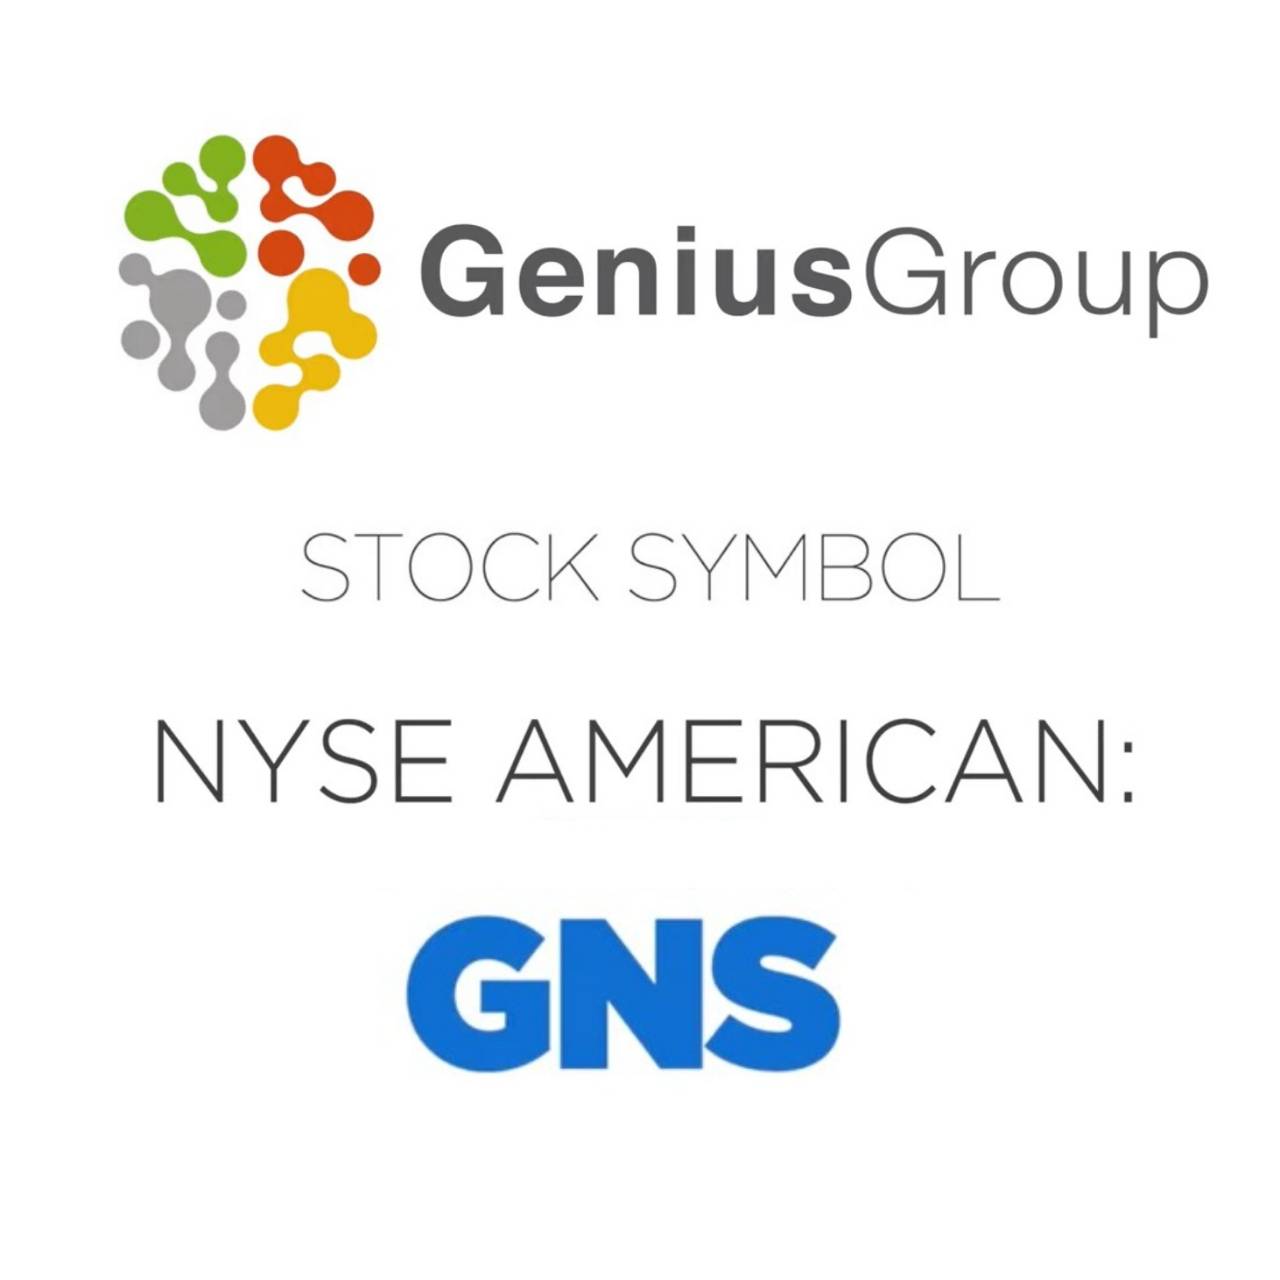 <h1>หุ้น GNS บริษัทแม่เข้าตลาด NYSE แล้ว</h1>